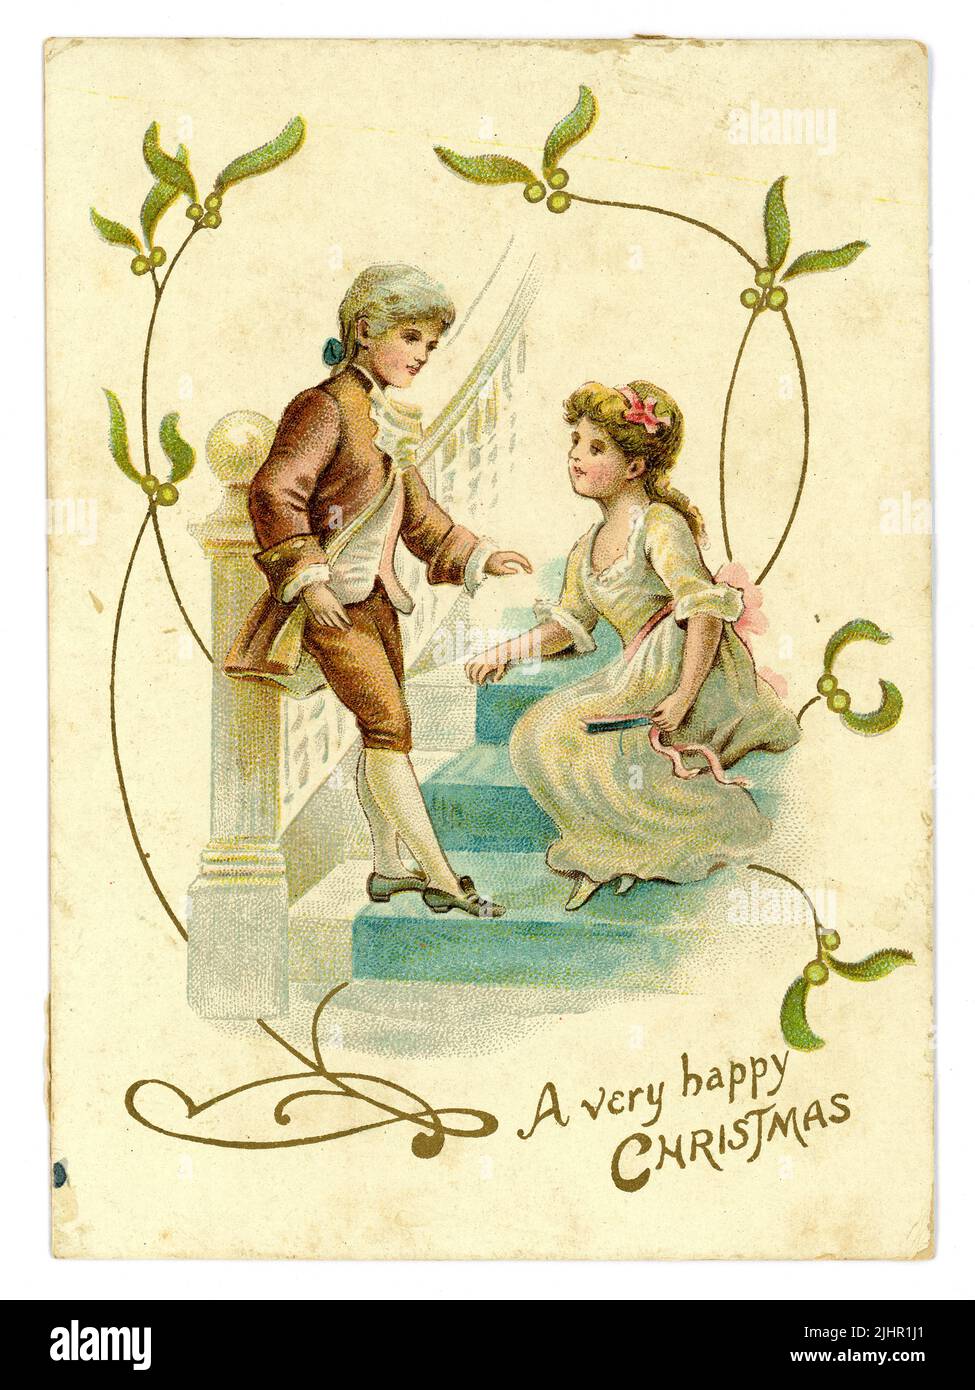 Original Edwardian era Christmas Greetings card, mistletoe, children in Regency period style (Regency was 1811-1820) clothes child couple courting, circa 1905 U.K. Stock Photo